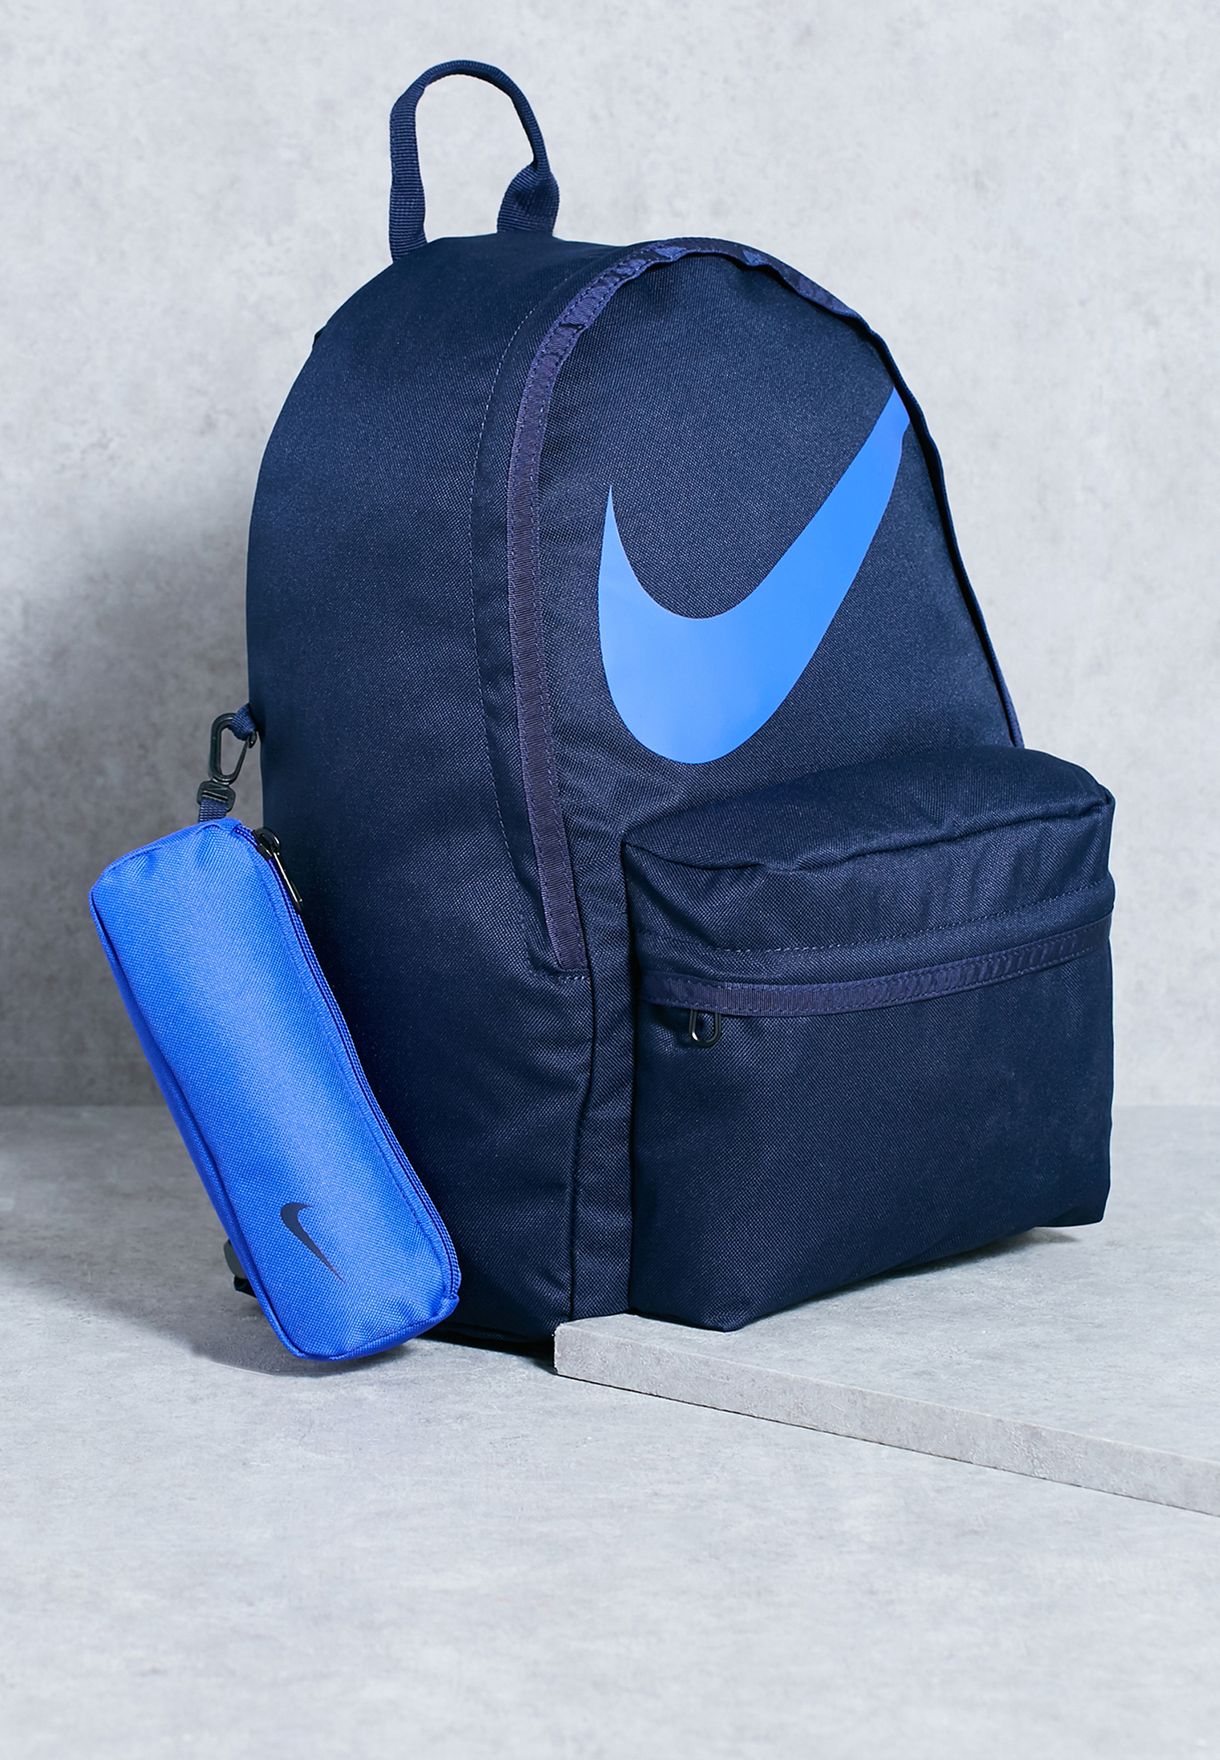 nike halfday backpack blue